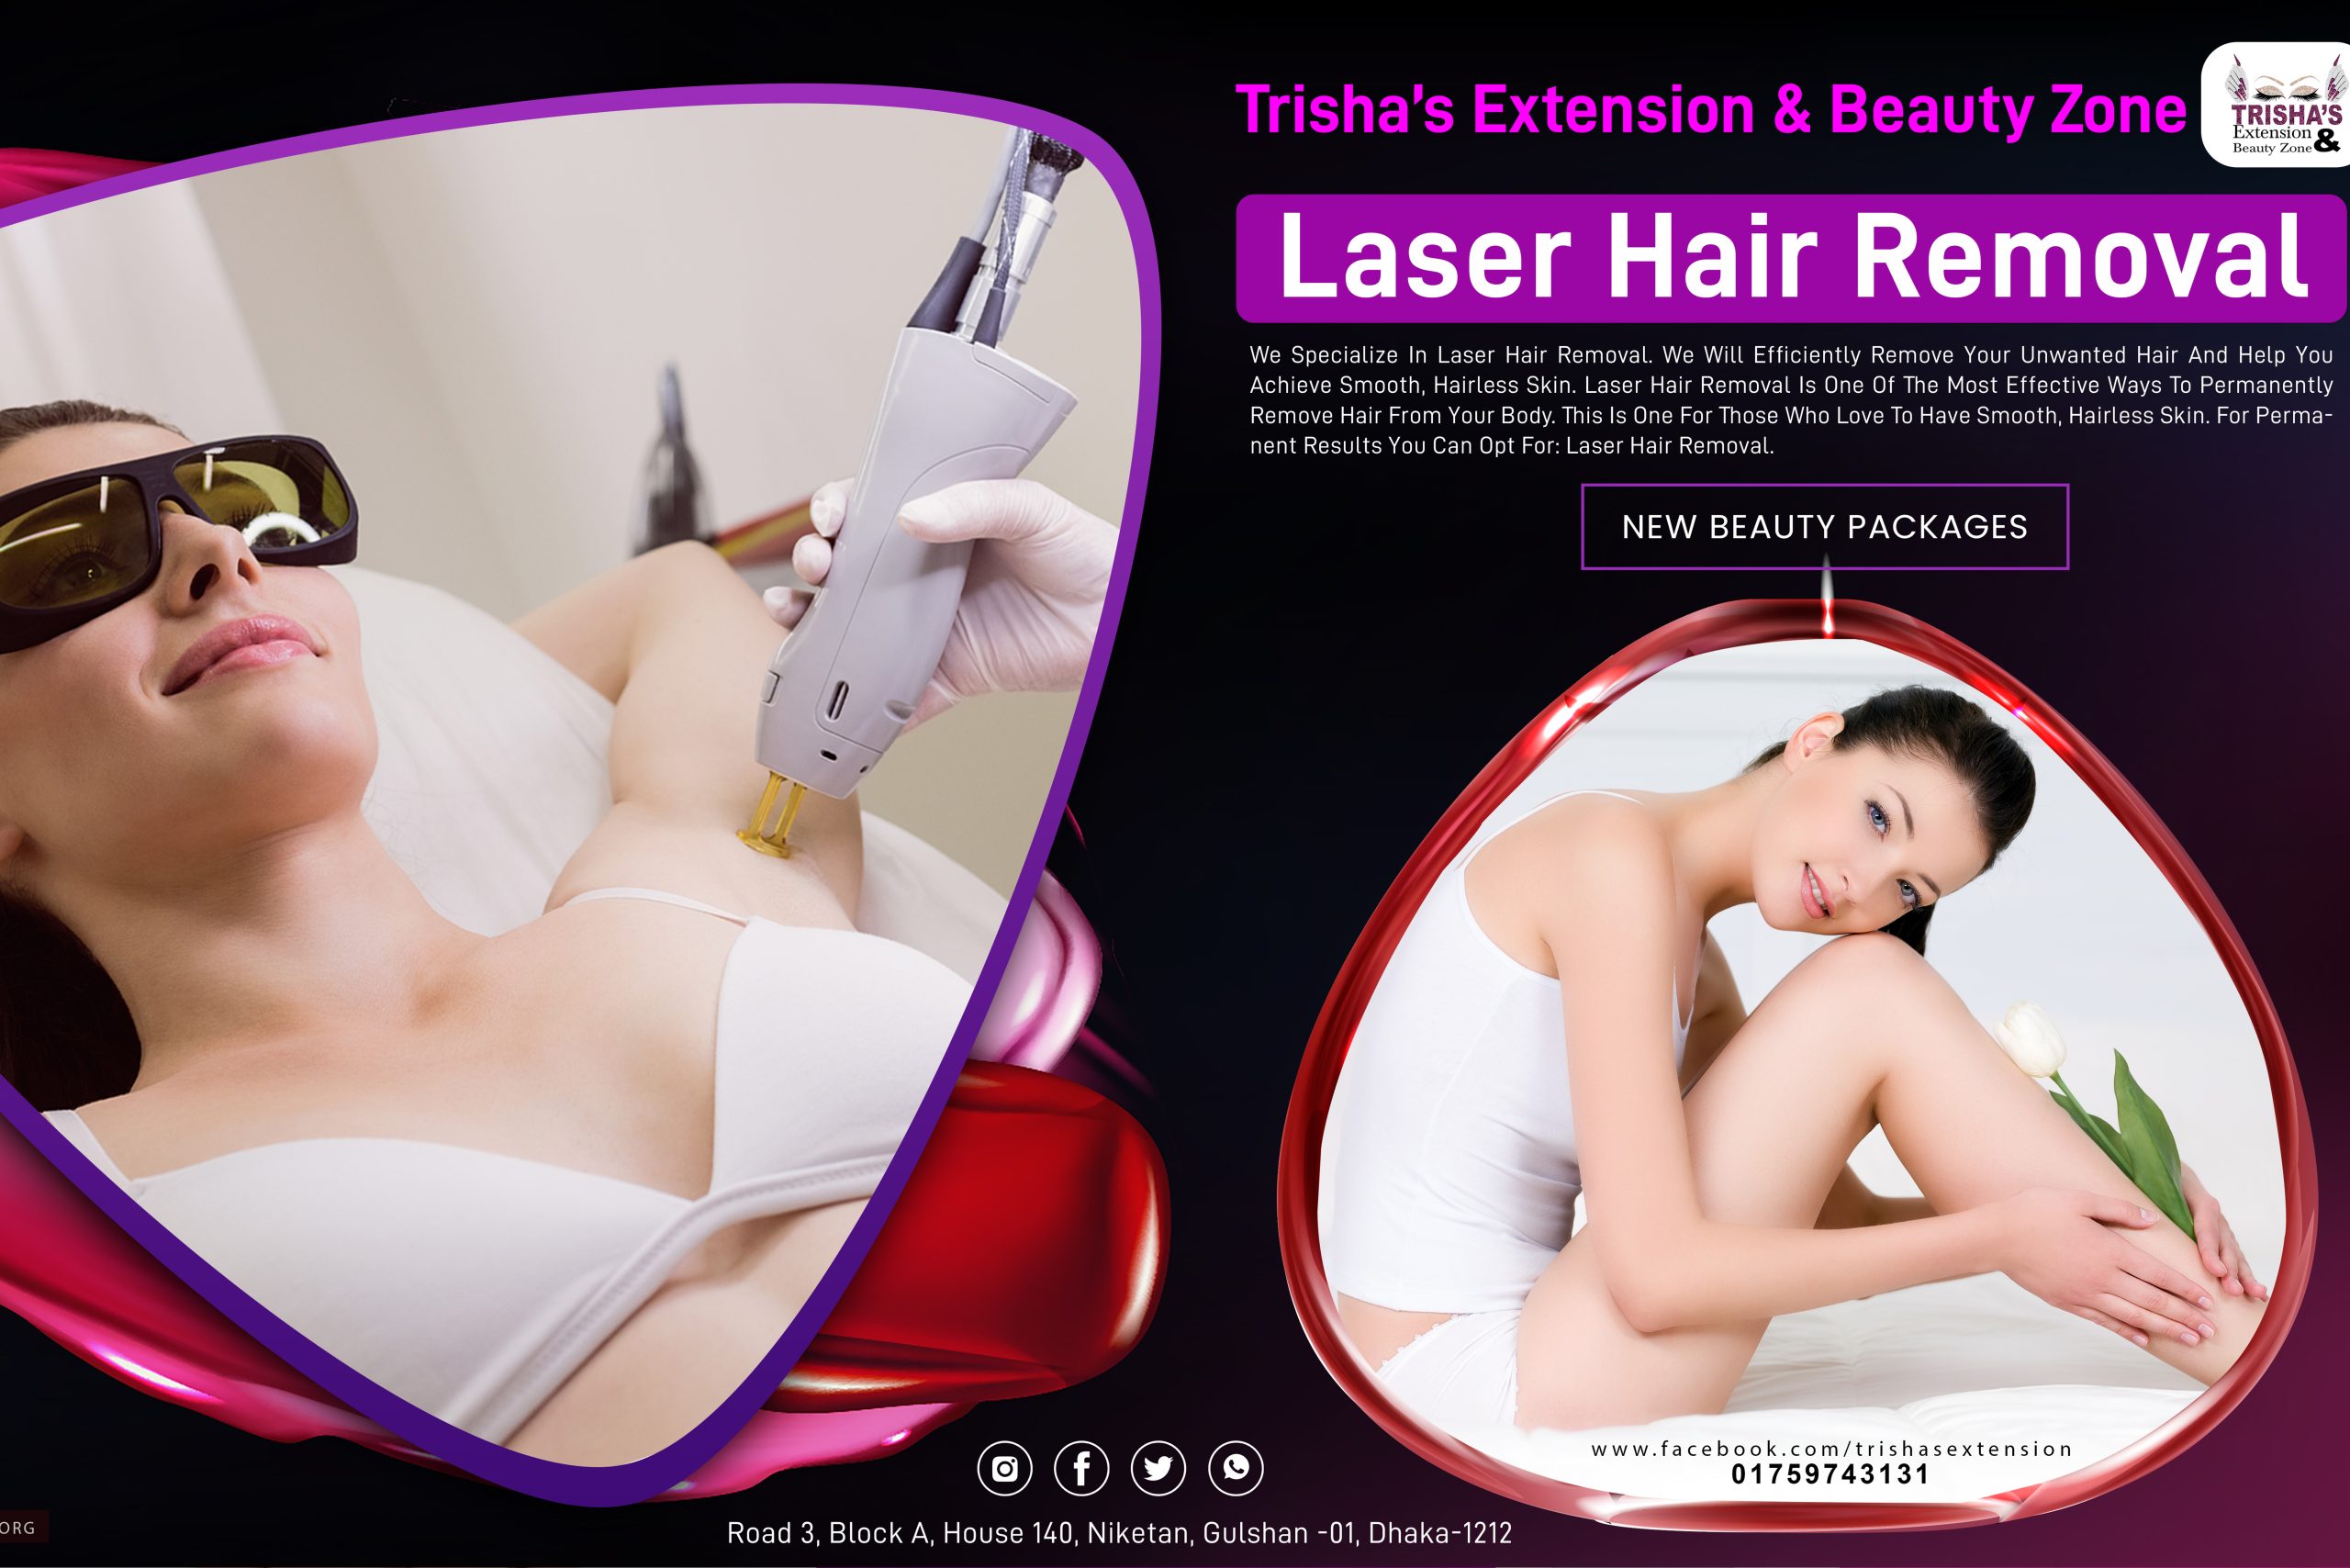 Trisha’s Extension & Beauty Zone2